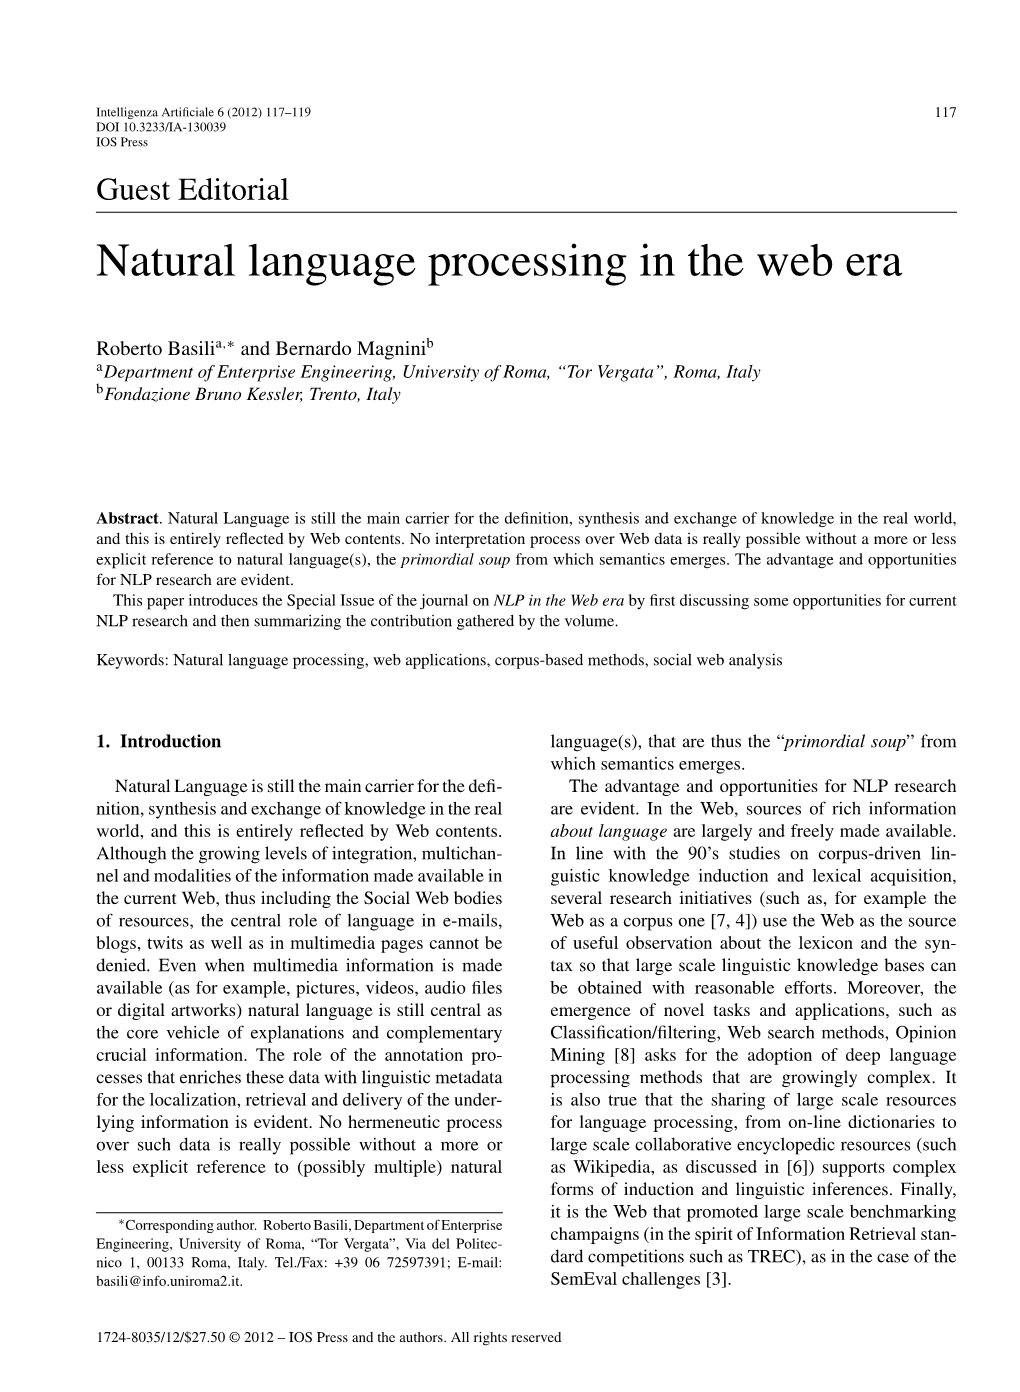 Natural Language Processing in the Web Era